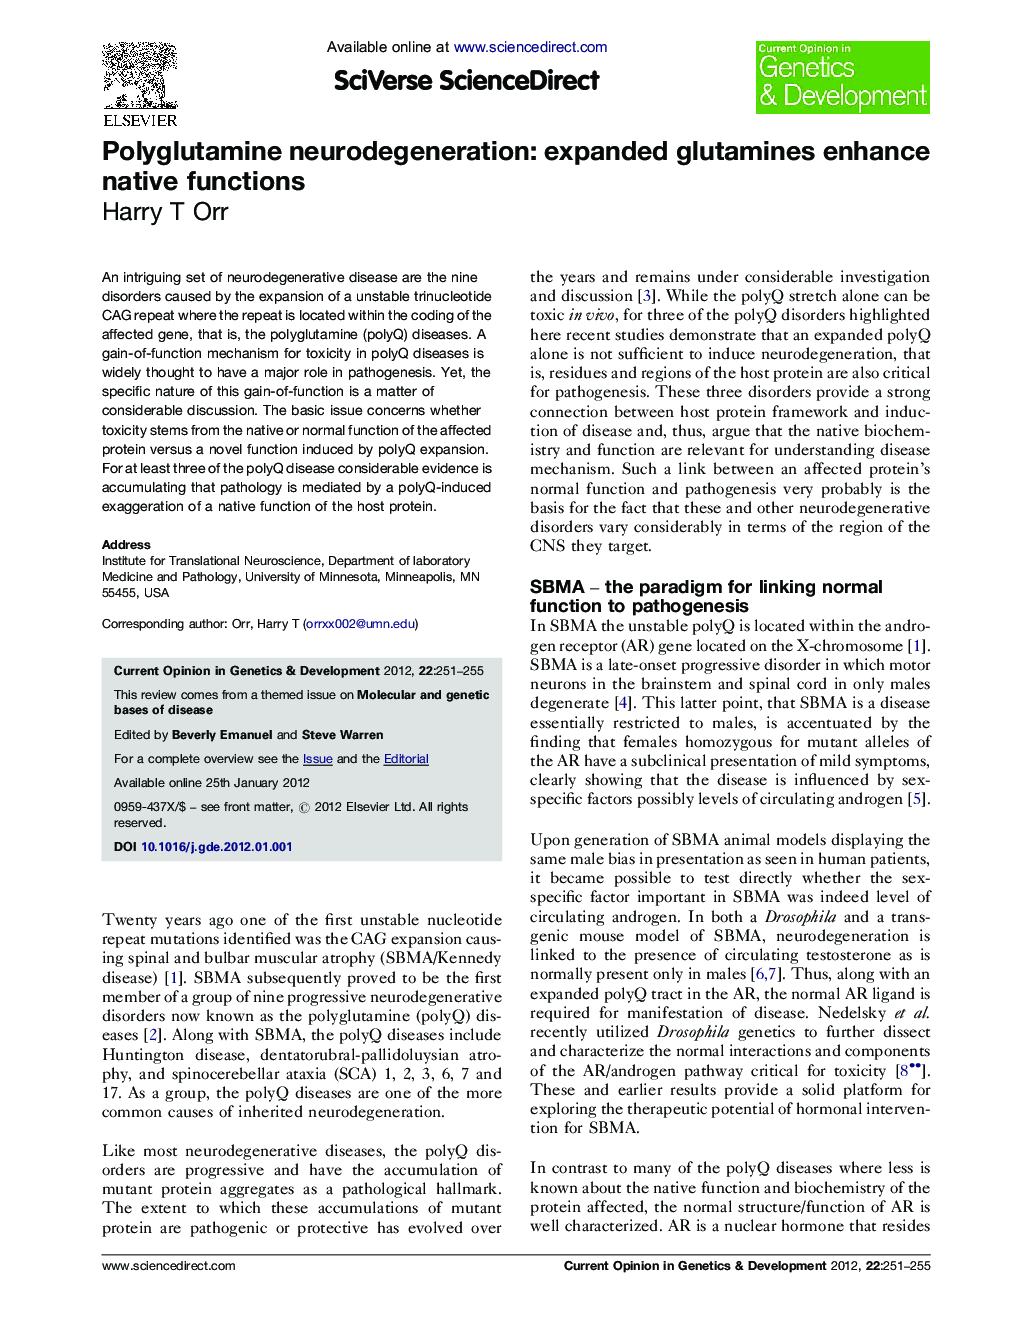 Polyglutamine neurodegeneration: expanded glutamines enhance native functions